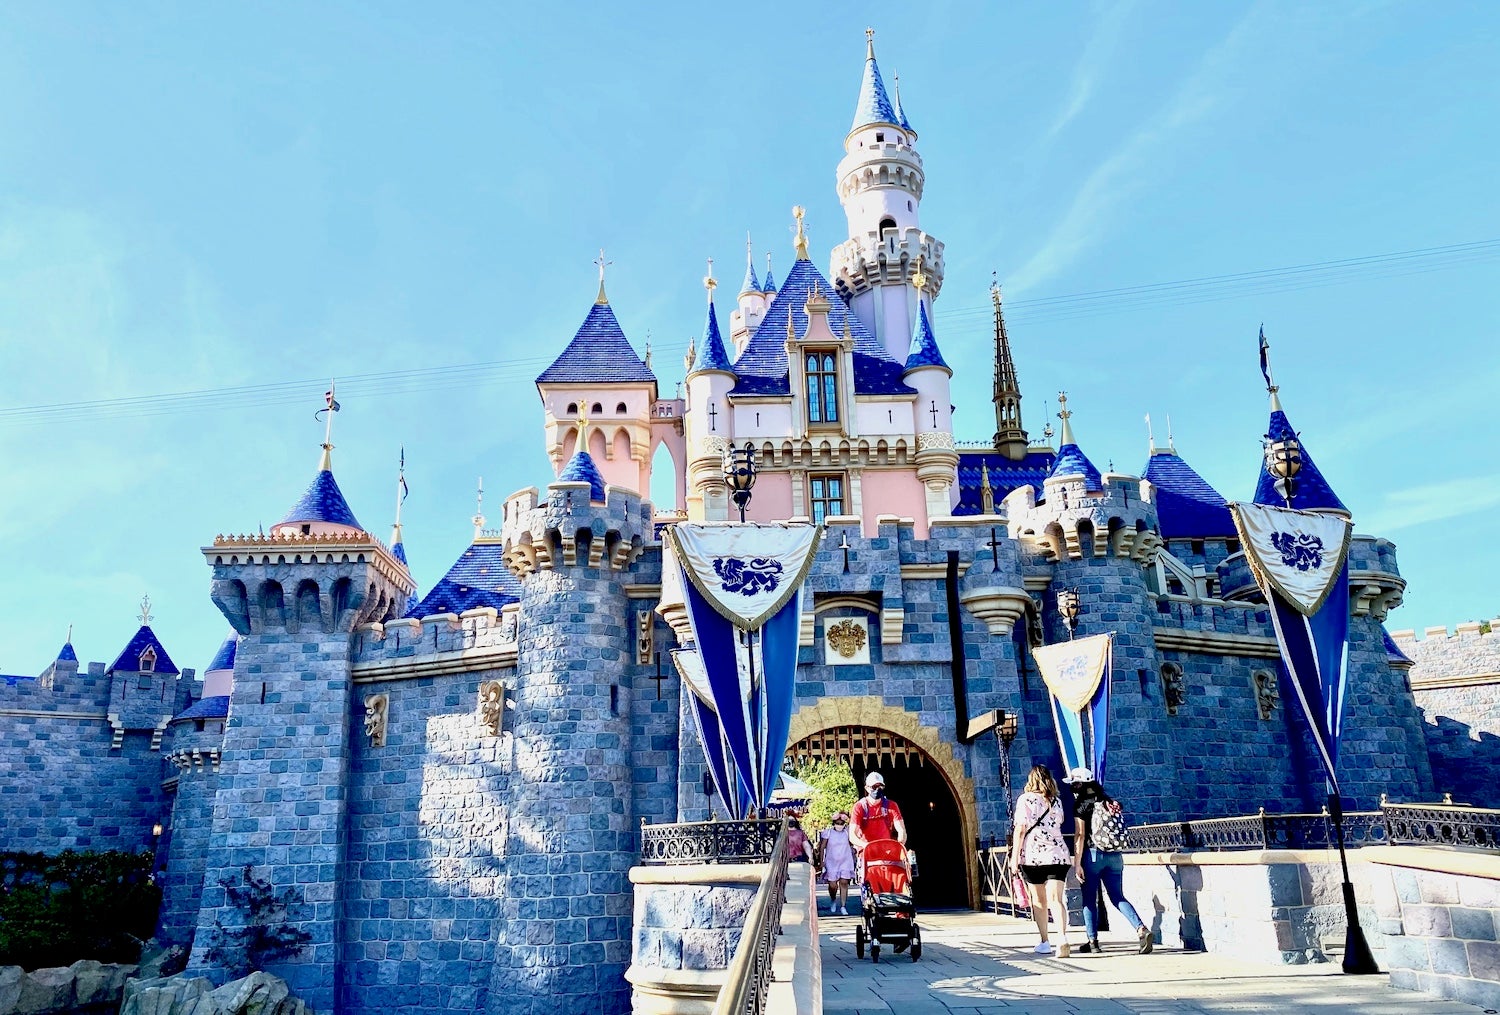 Disneyland Cinderella's Castle on reopening day